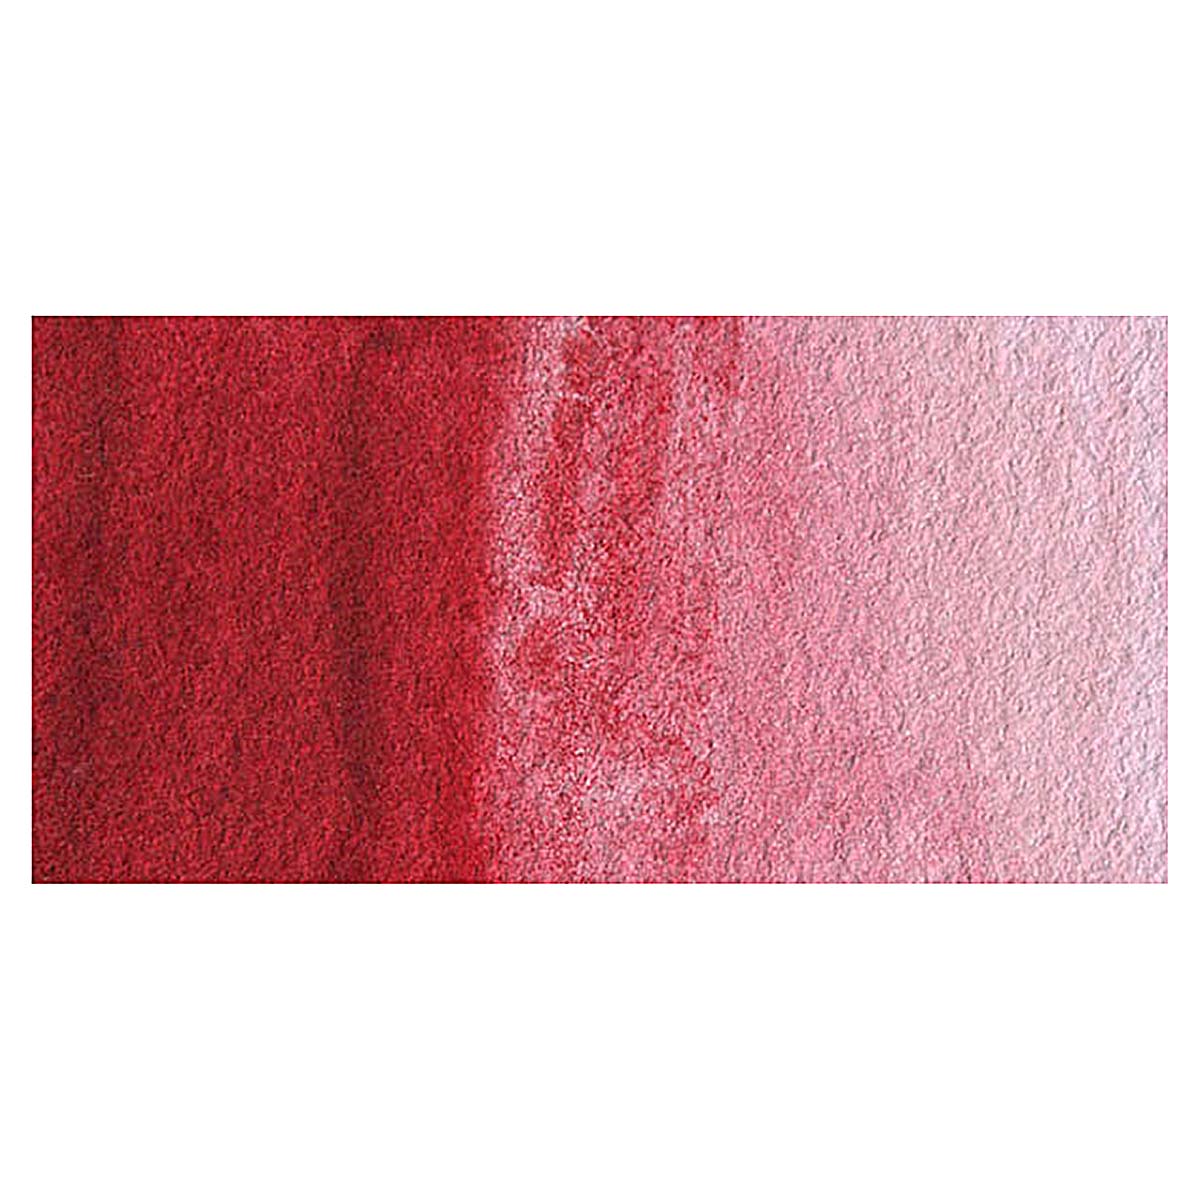 Grumbacher Finest Artists' Watercolor - Alizarin Crimson, 14 ml Tube